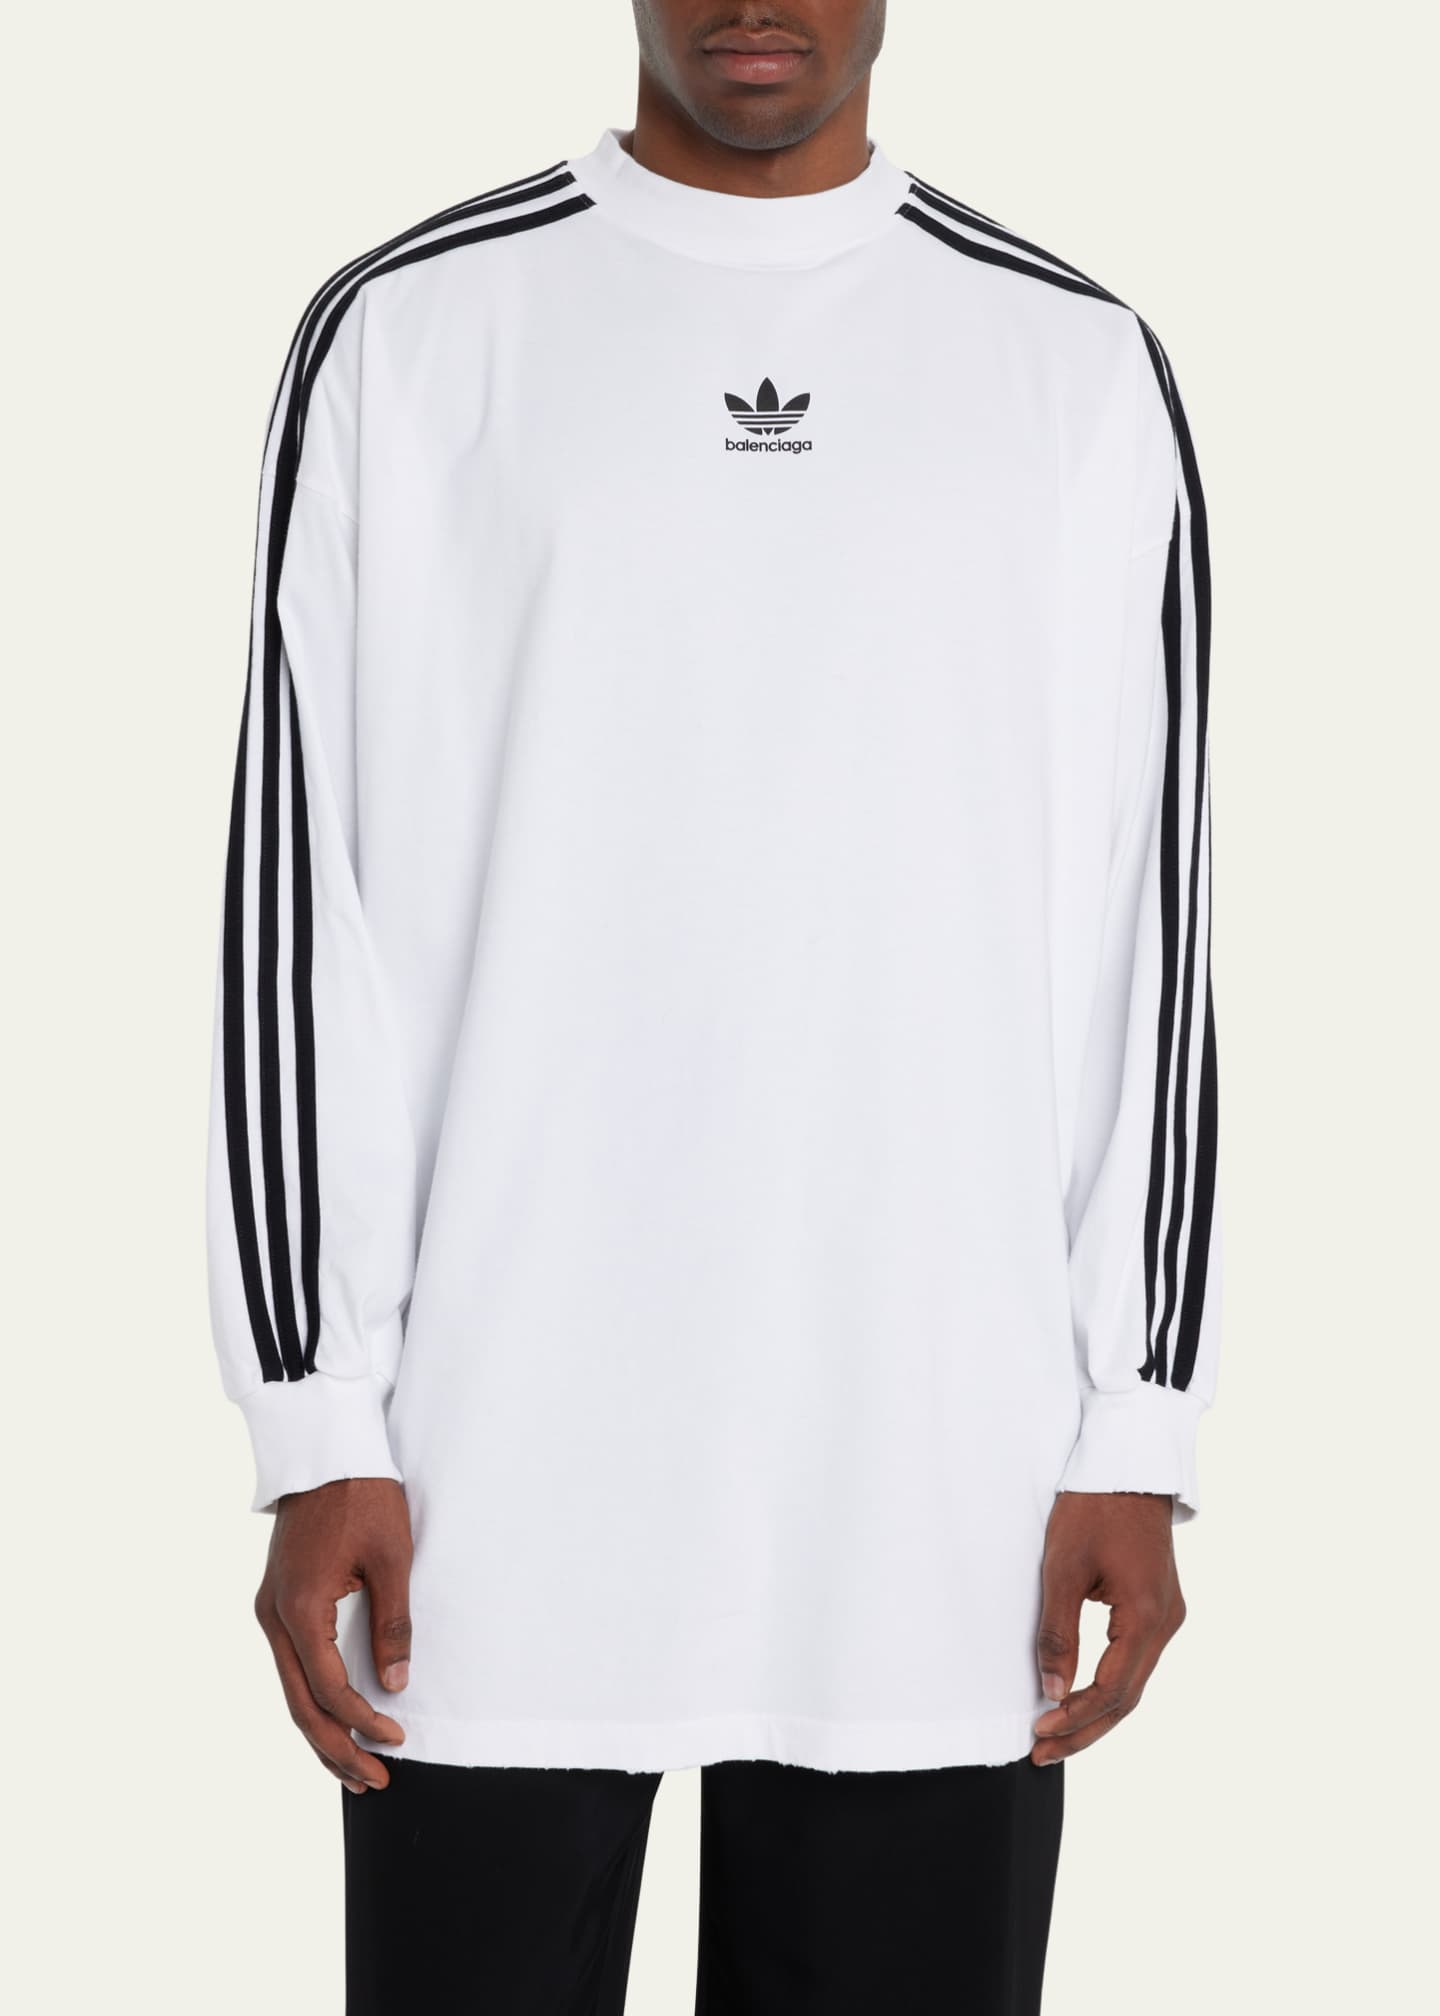 Persona Materialisme Ligner Balenciaga x Adidas Men's 3-Stripes Oversized T-Shirt - Bergdorf Goodman